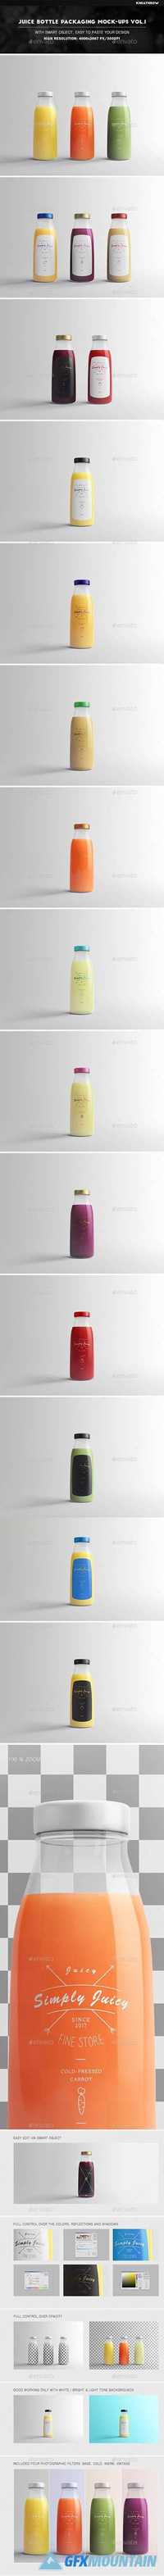 Juice Bottle Packaging Mock-Ups Vol.1 20136576